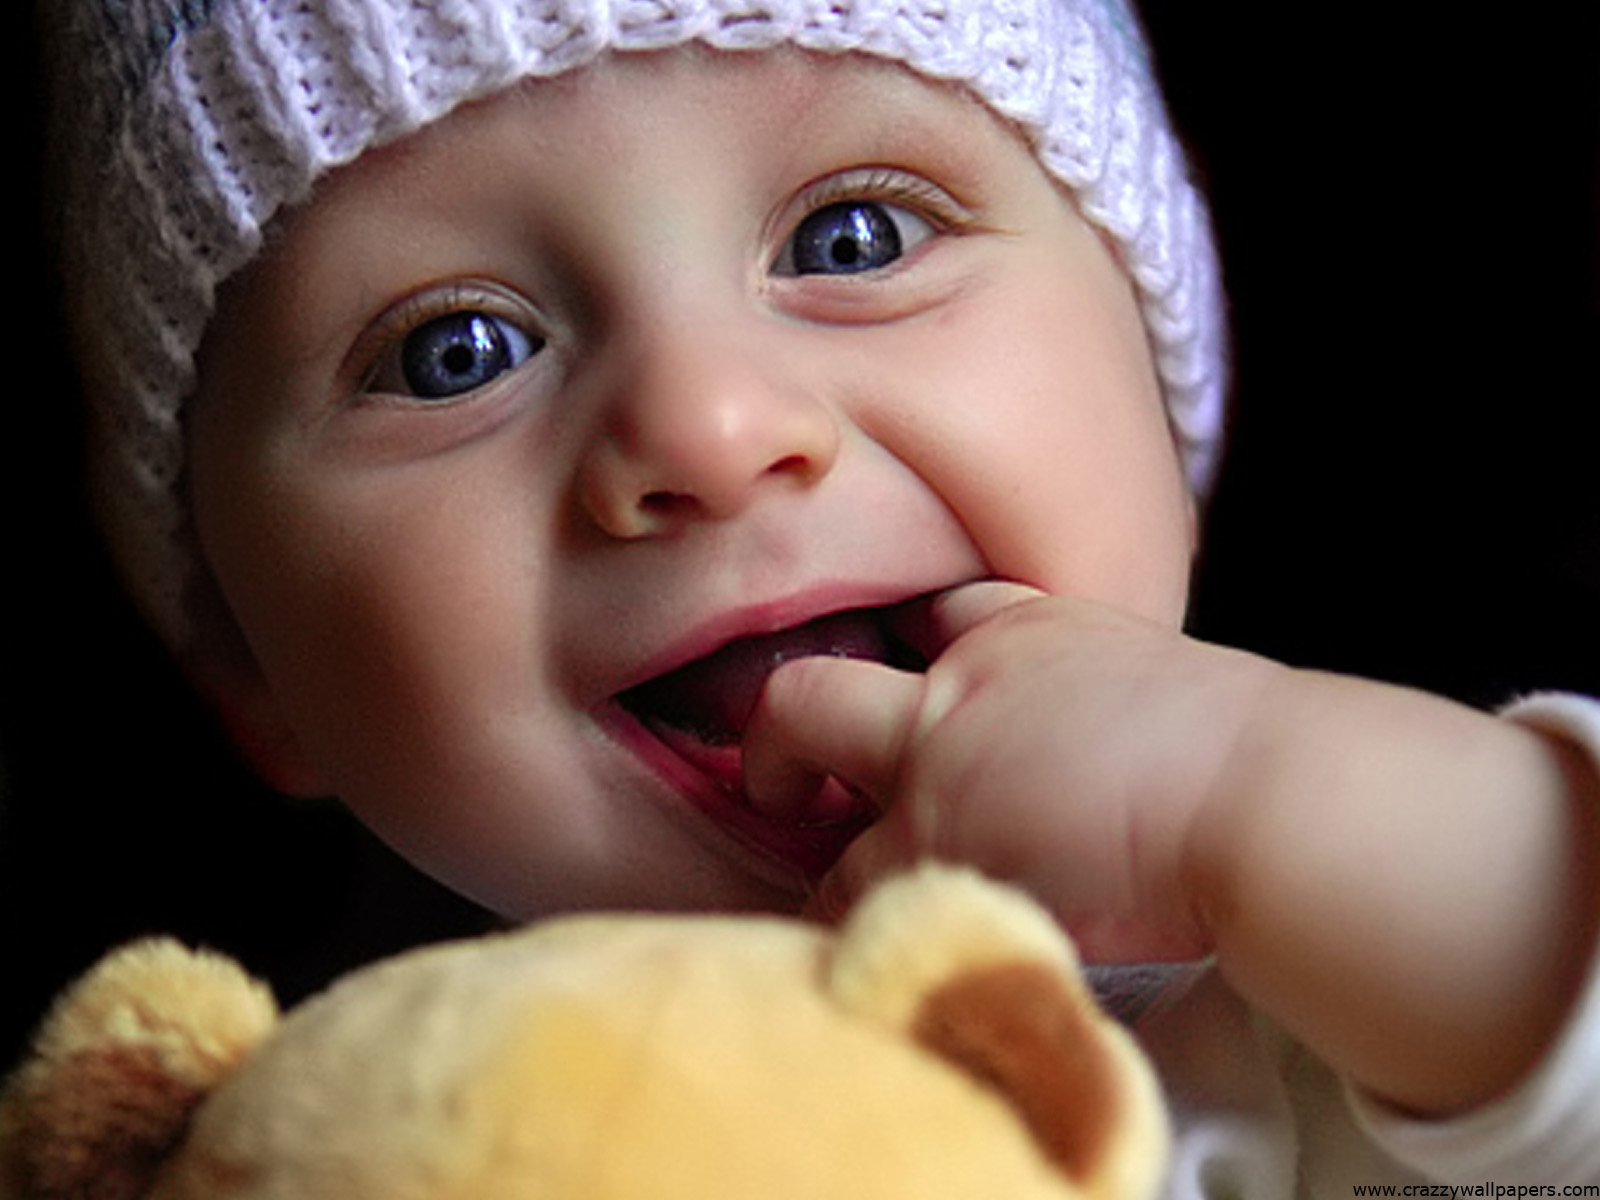 descarga gratuita de fondo de pantalla de muñeca,niño,bebé,sonrisa,labio,boca